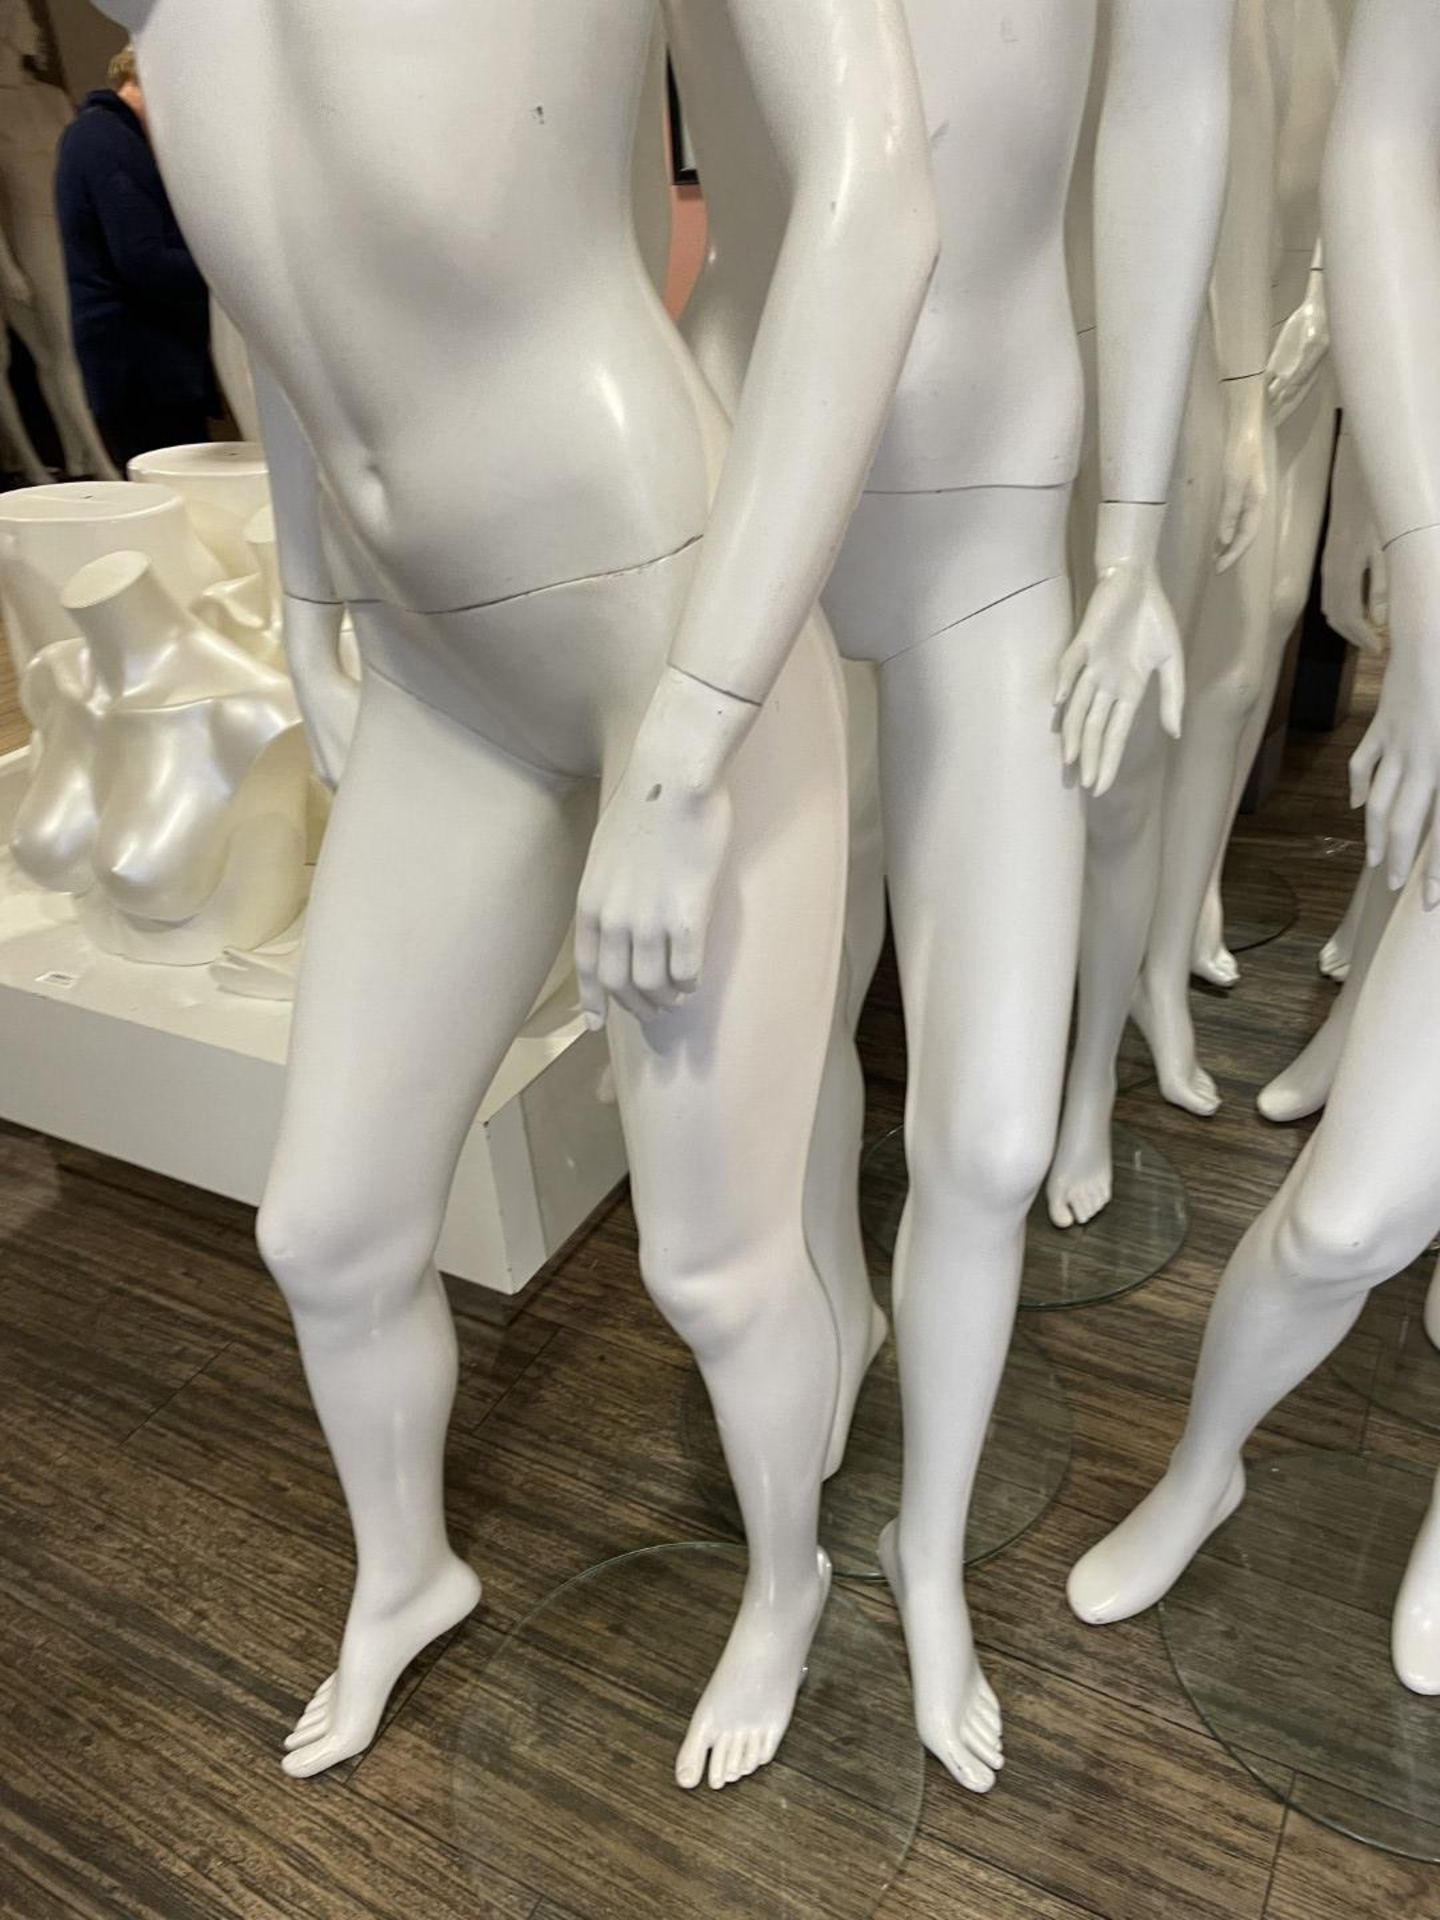 5 x Full Size Female Mannequins on Stands - CL670 - Ref: GEM210 - Location: Gravesend, DA11 - Image 6 of 8